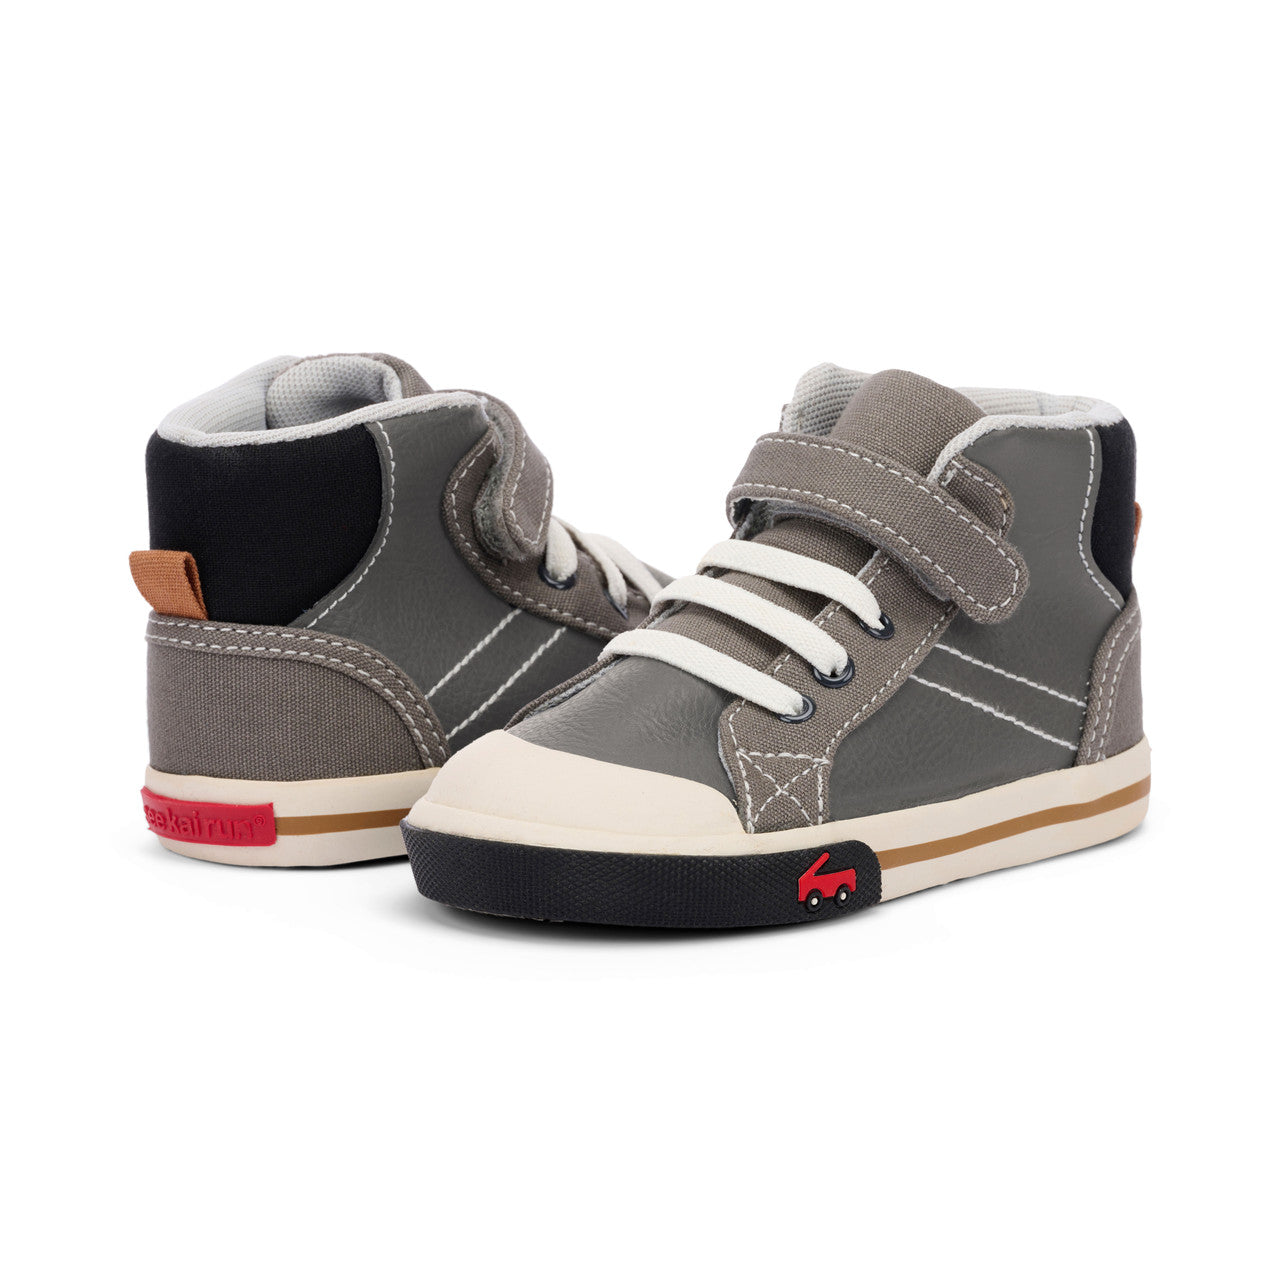 Dane Kid's High-Top Leather Sneaker - Gray